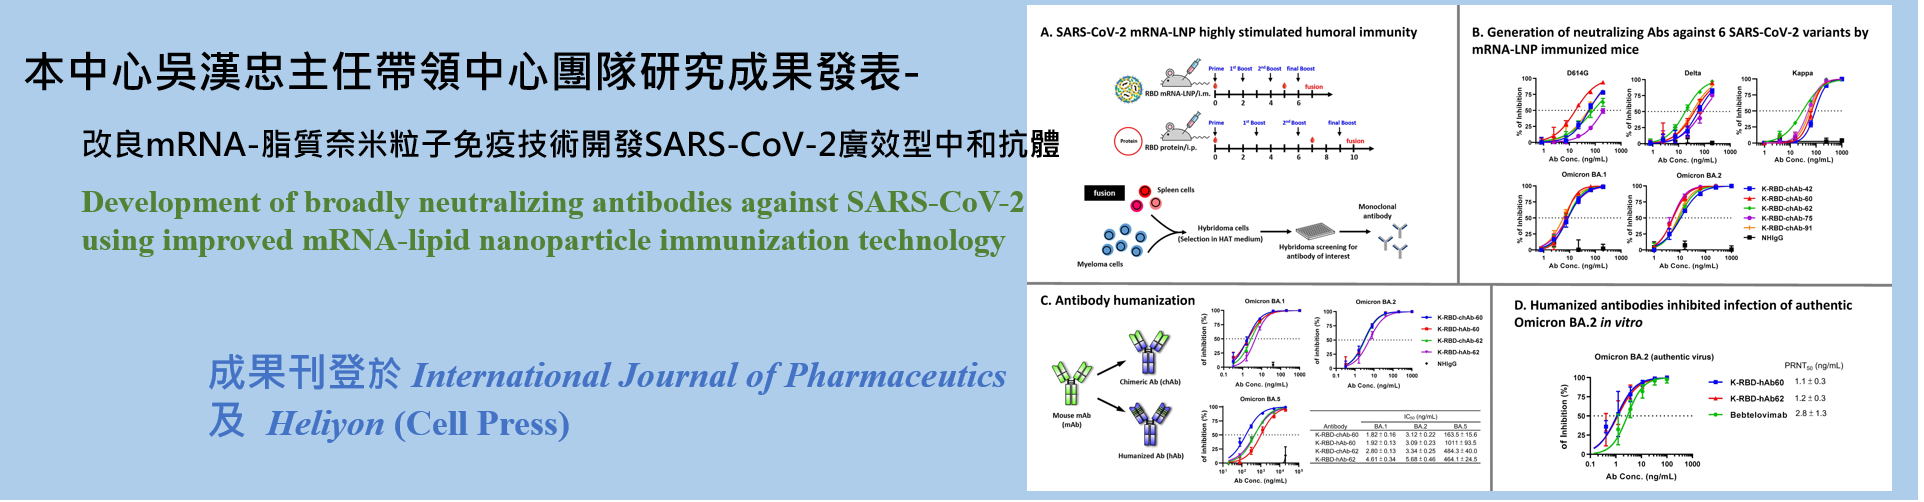 Development of broadly neutralizing antibodies against SARS-CoV-2 using improved mRNA-lipid nanoparticle immunization technology